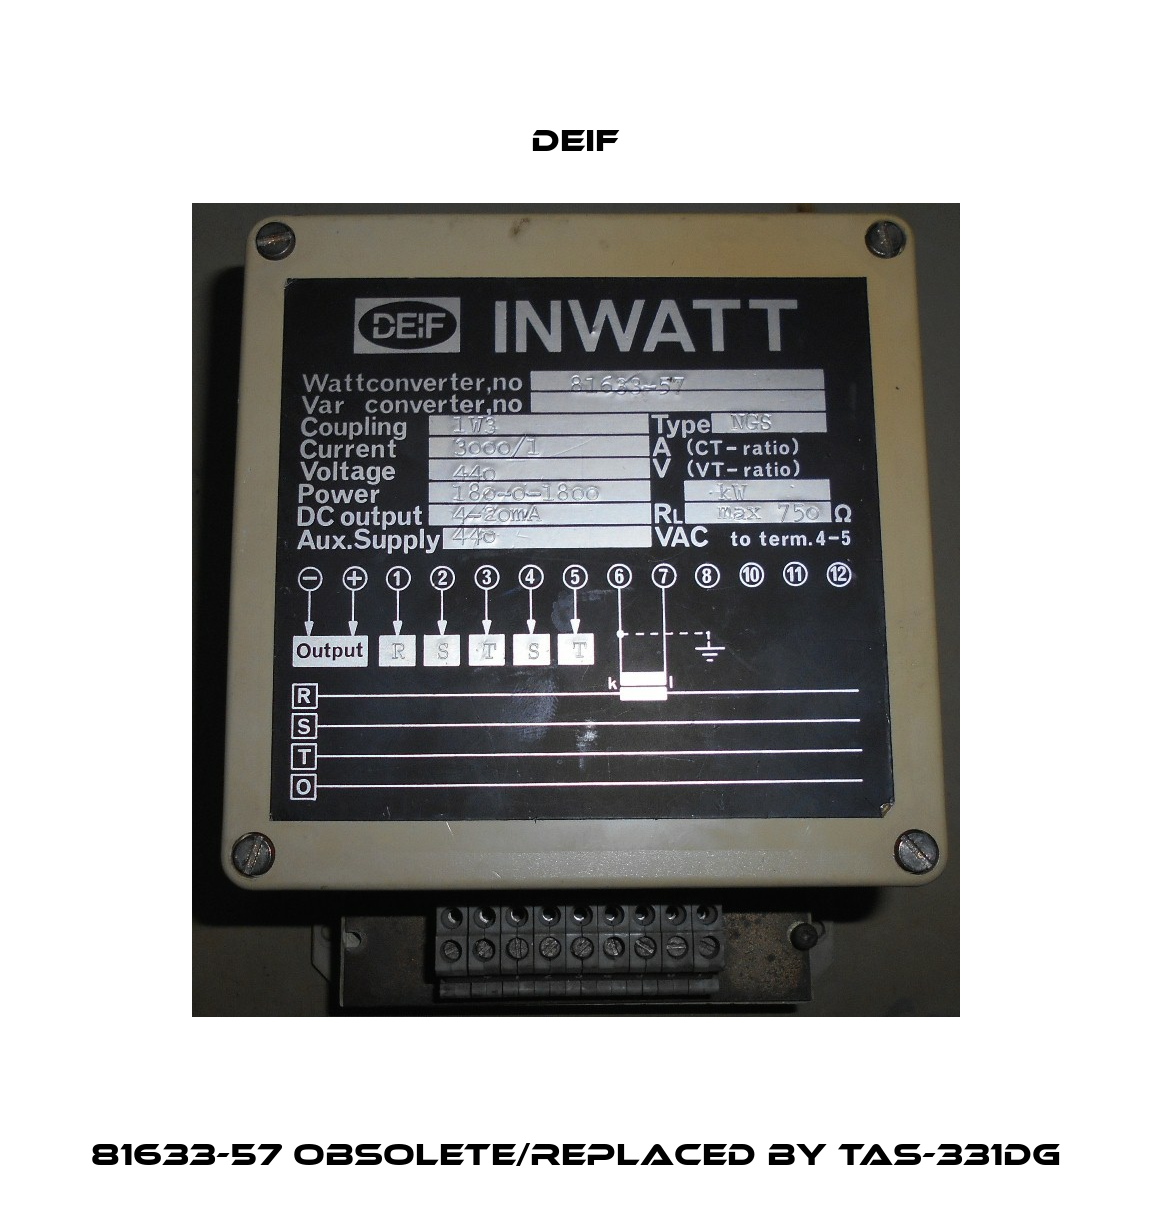 81633-57 obsolete/replaced by TAS-331DG Deif